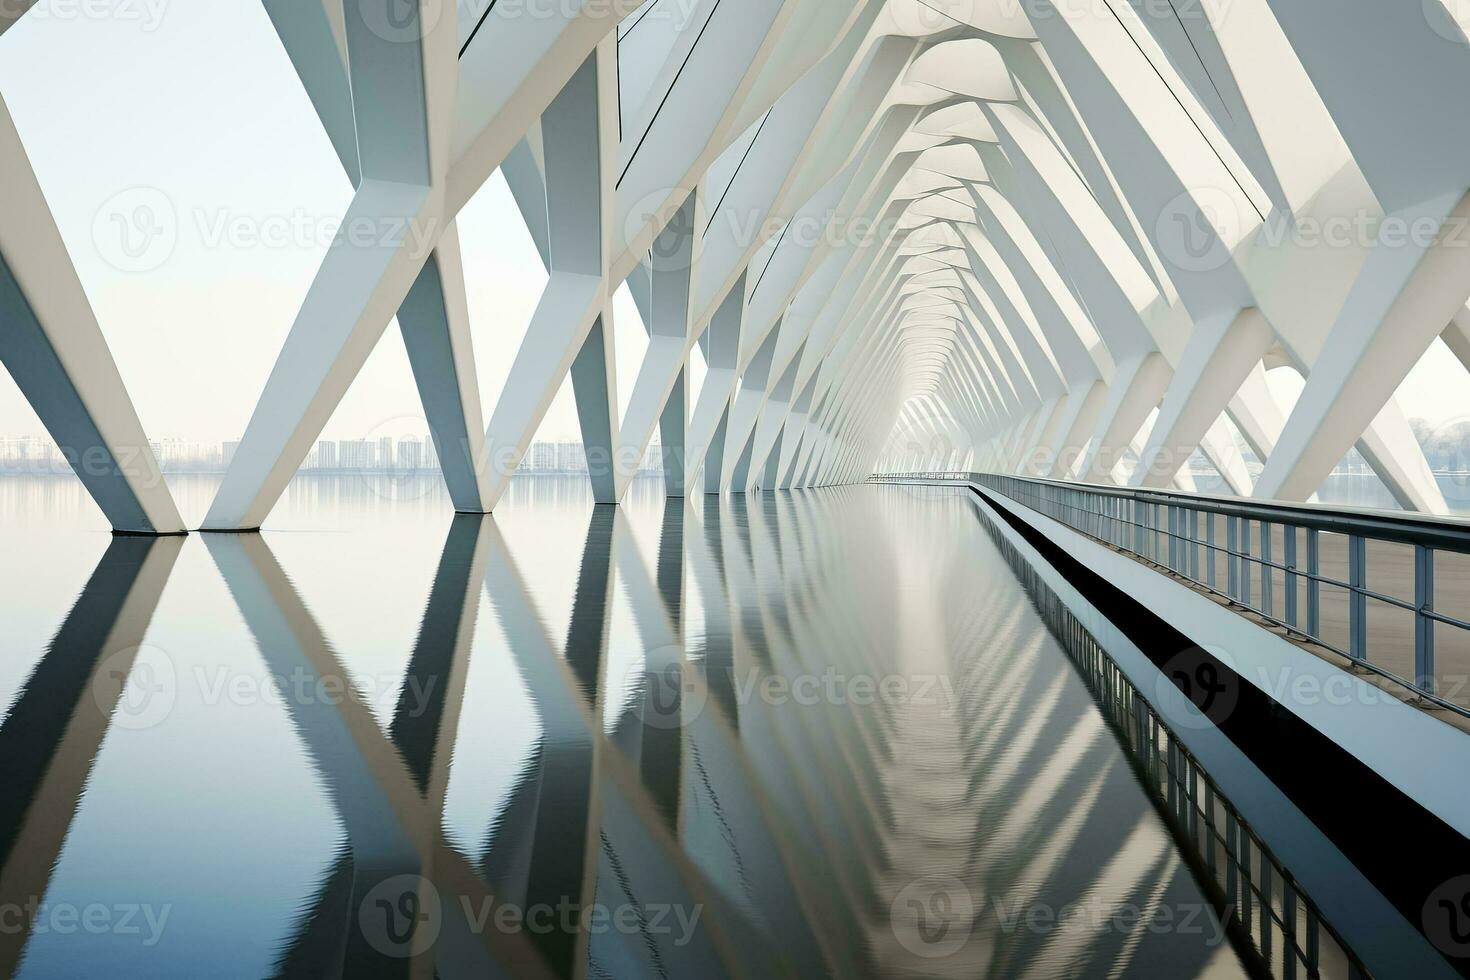 geometrisk enkelhet inramade inom de rena rader av modern bro arkitektur foto